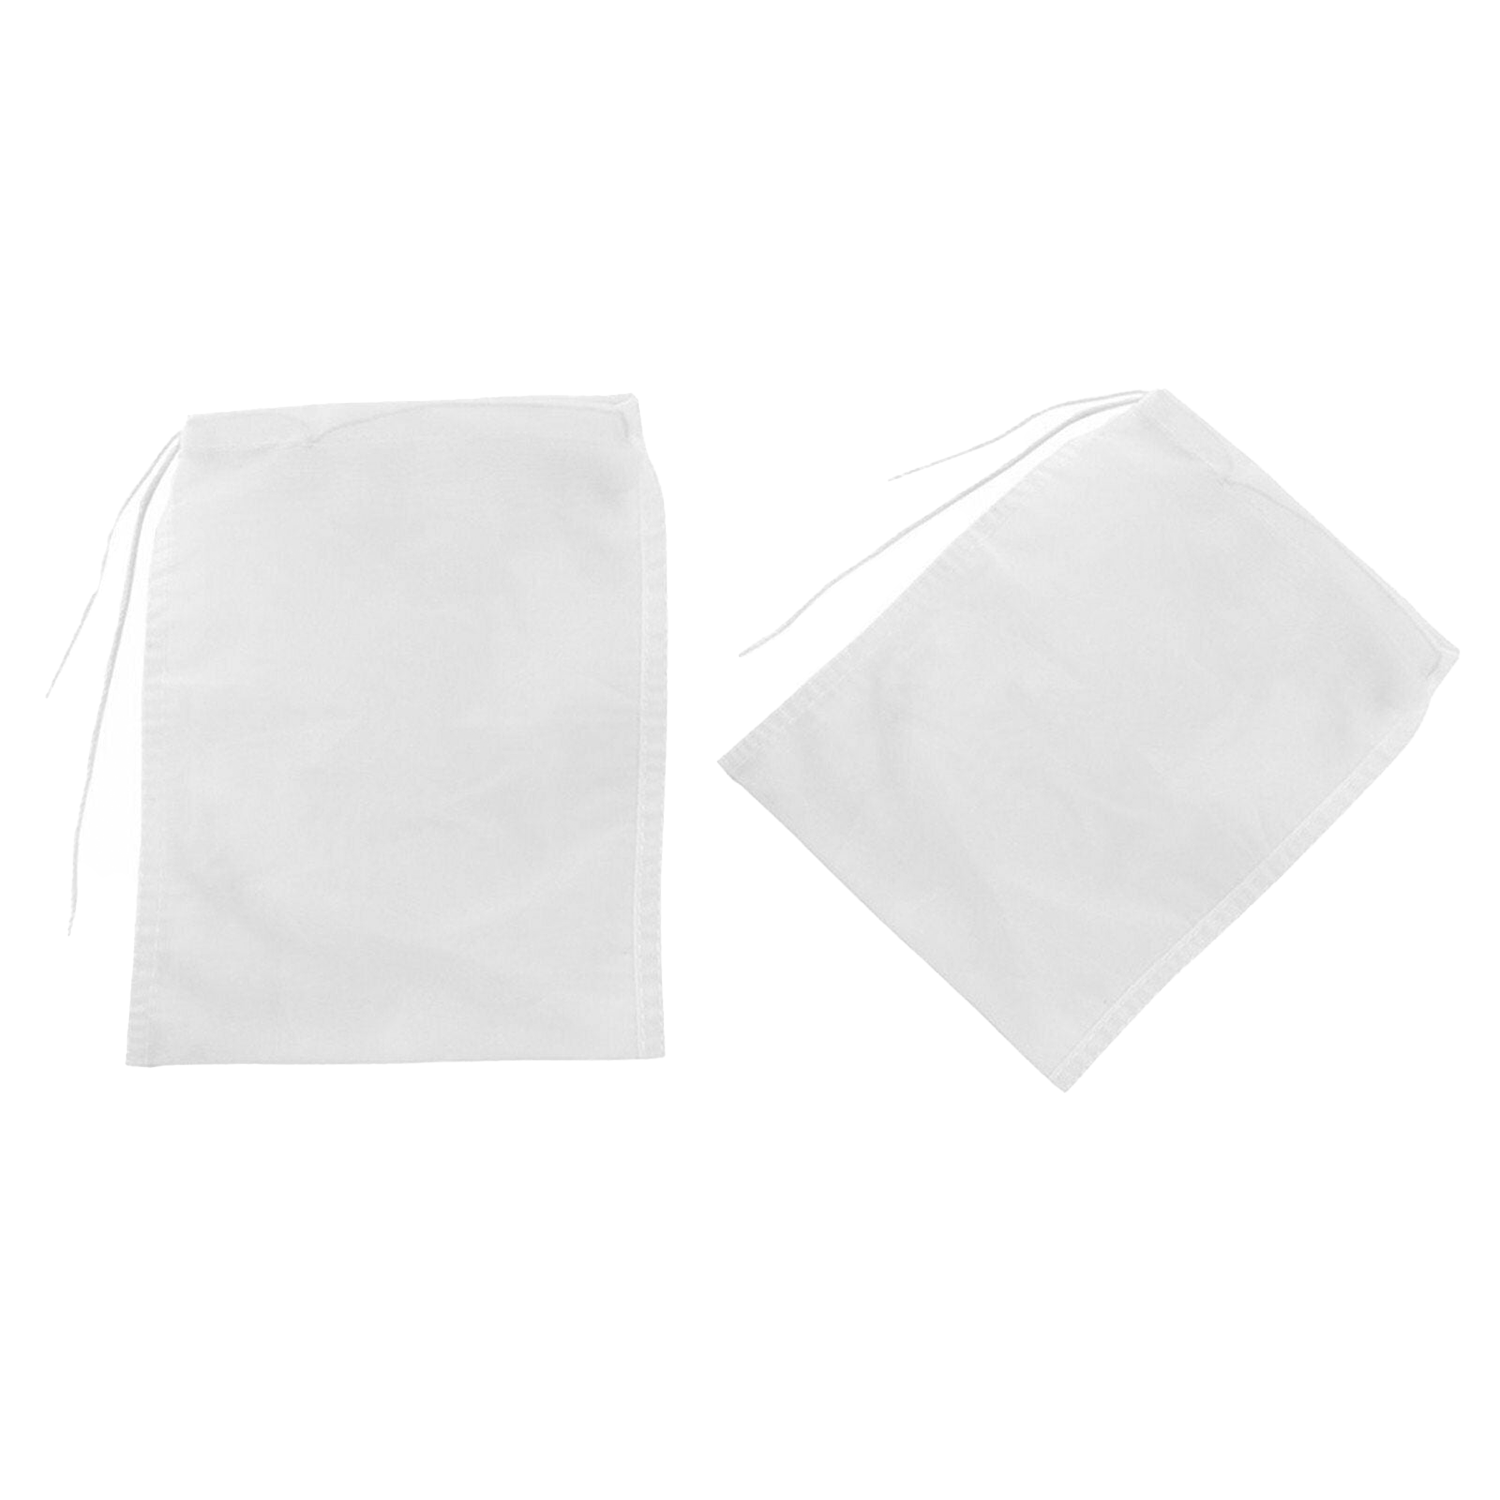 Nylon Fine Mesh Food Strainer Filter Bags - 2pcs